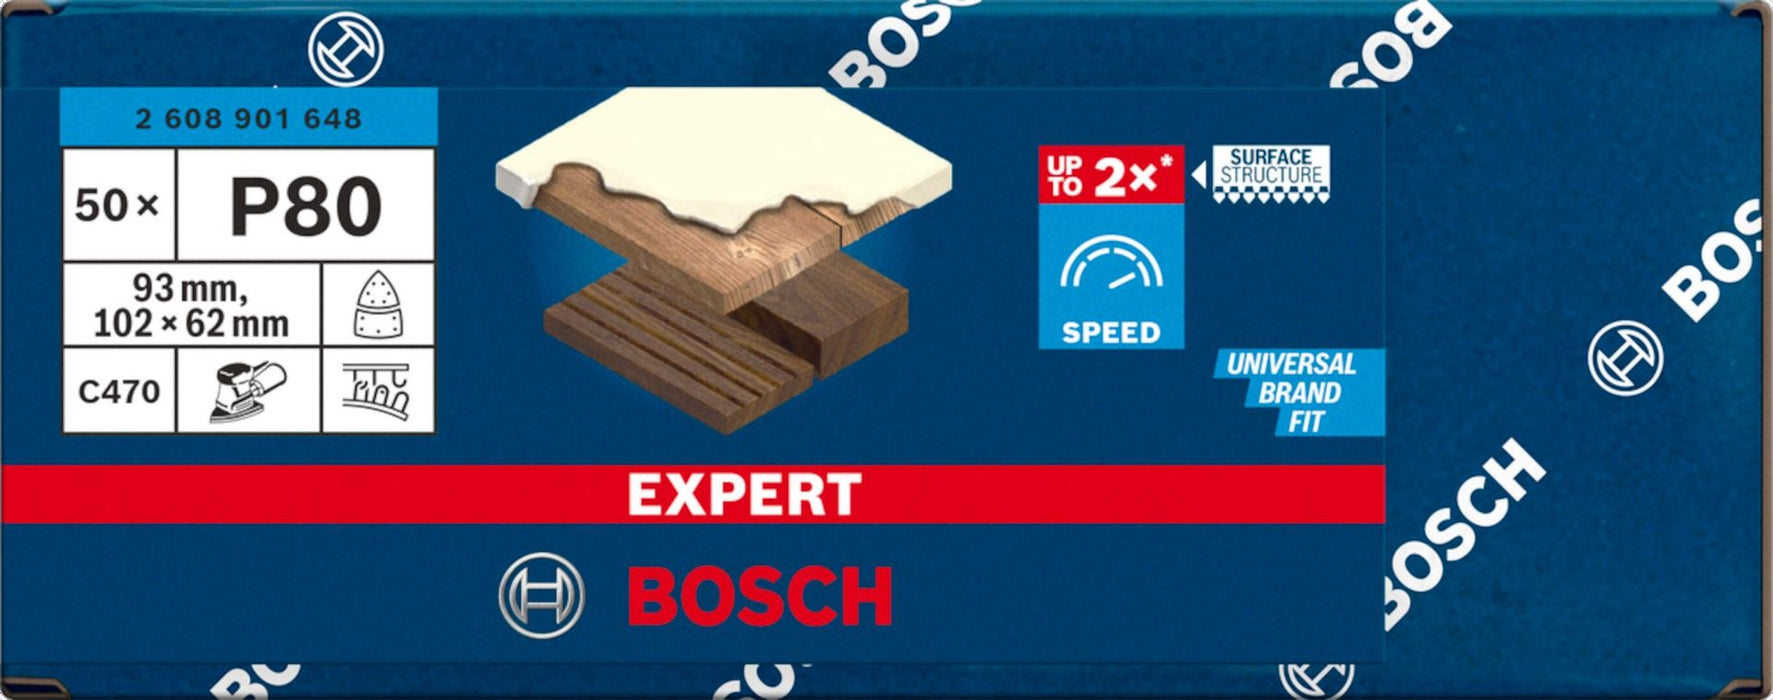 Bosch EXPERT list C470, 102x62/93 mm granulacija 80; pakovanje od 50 komada (2608901648)